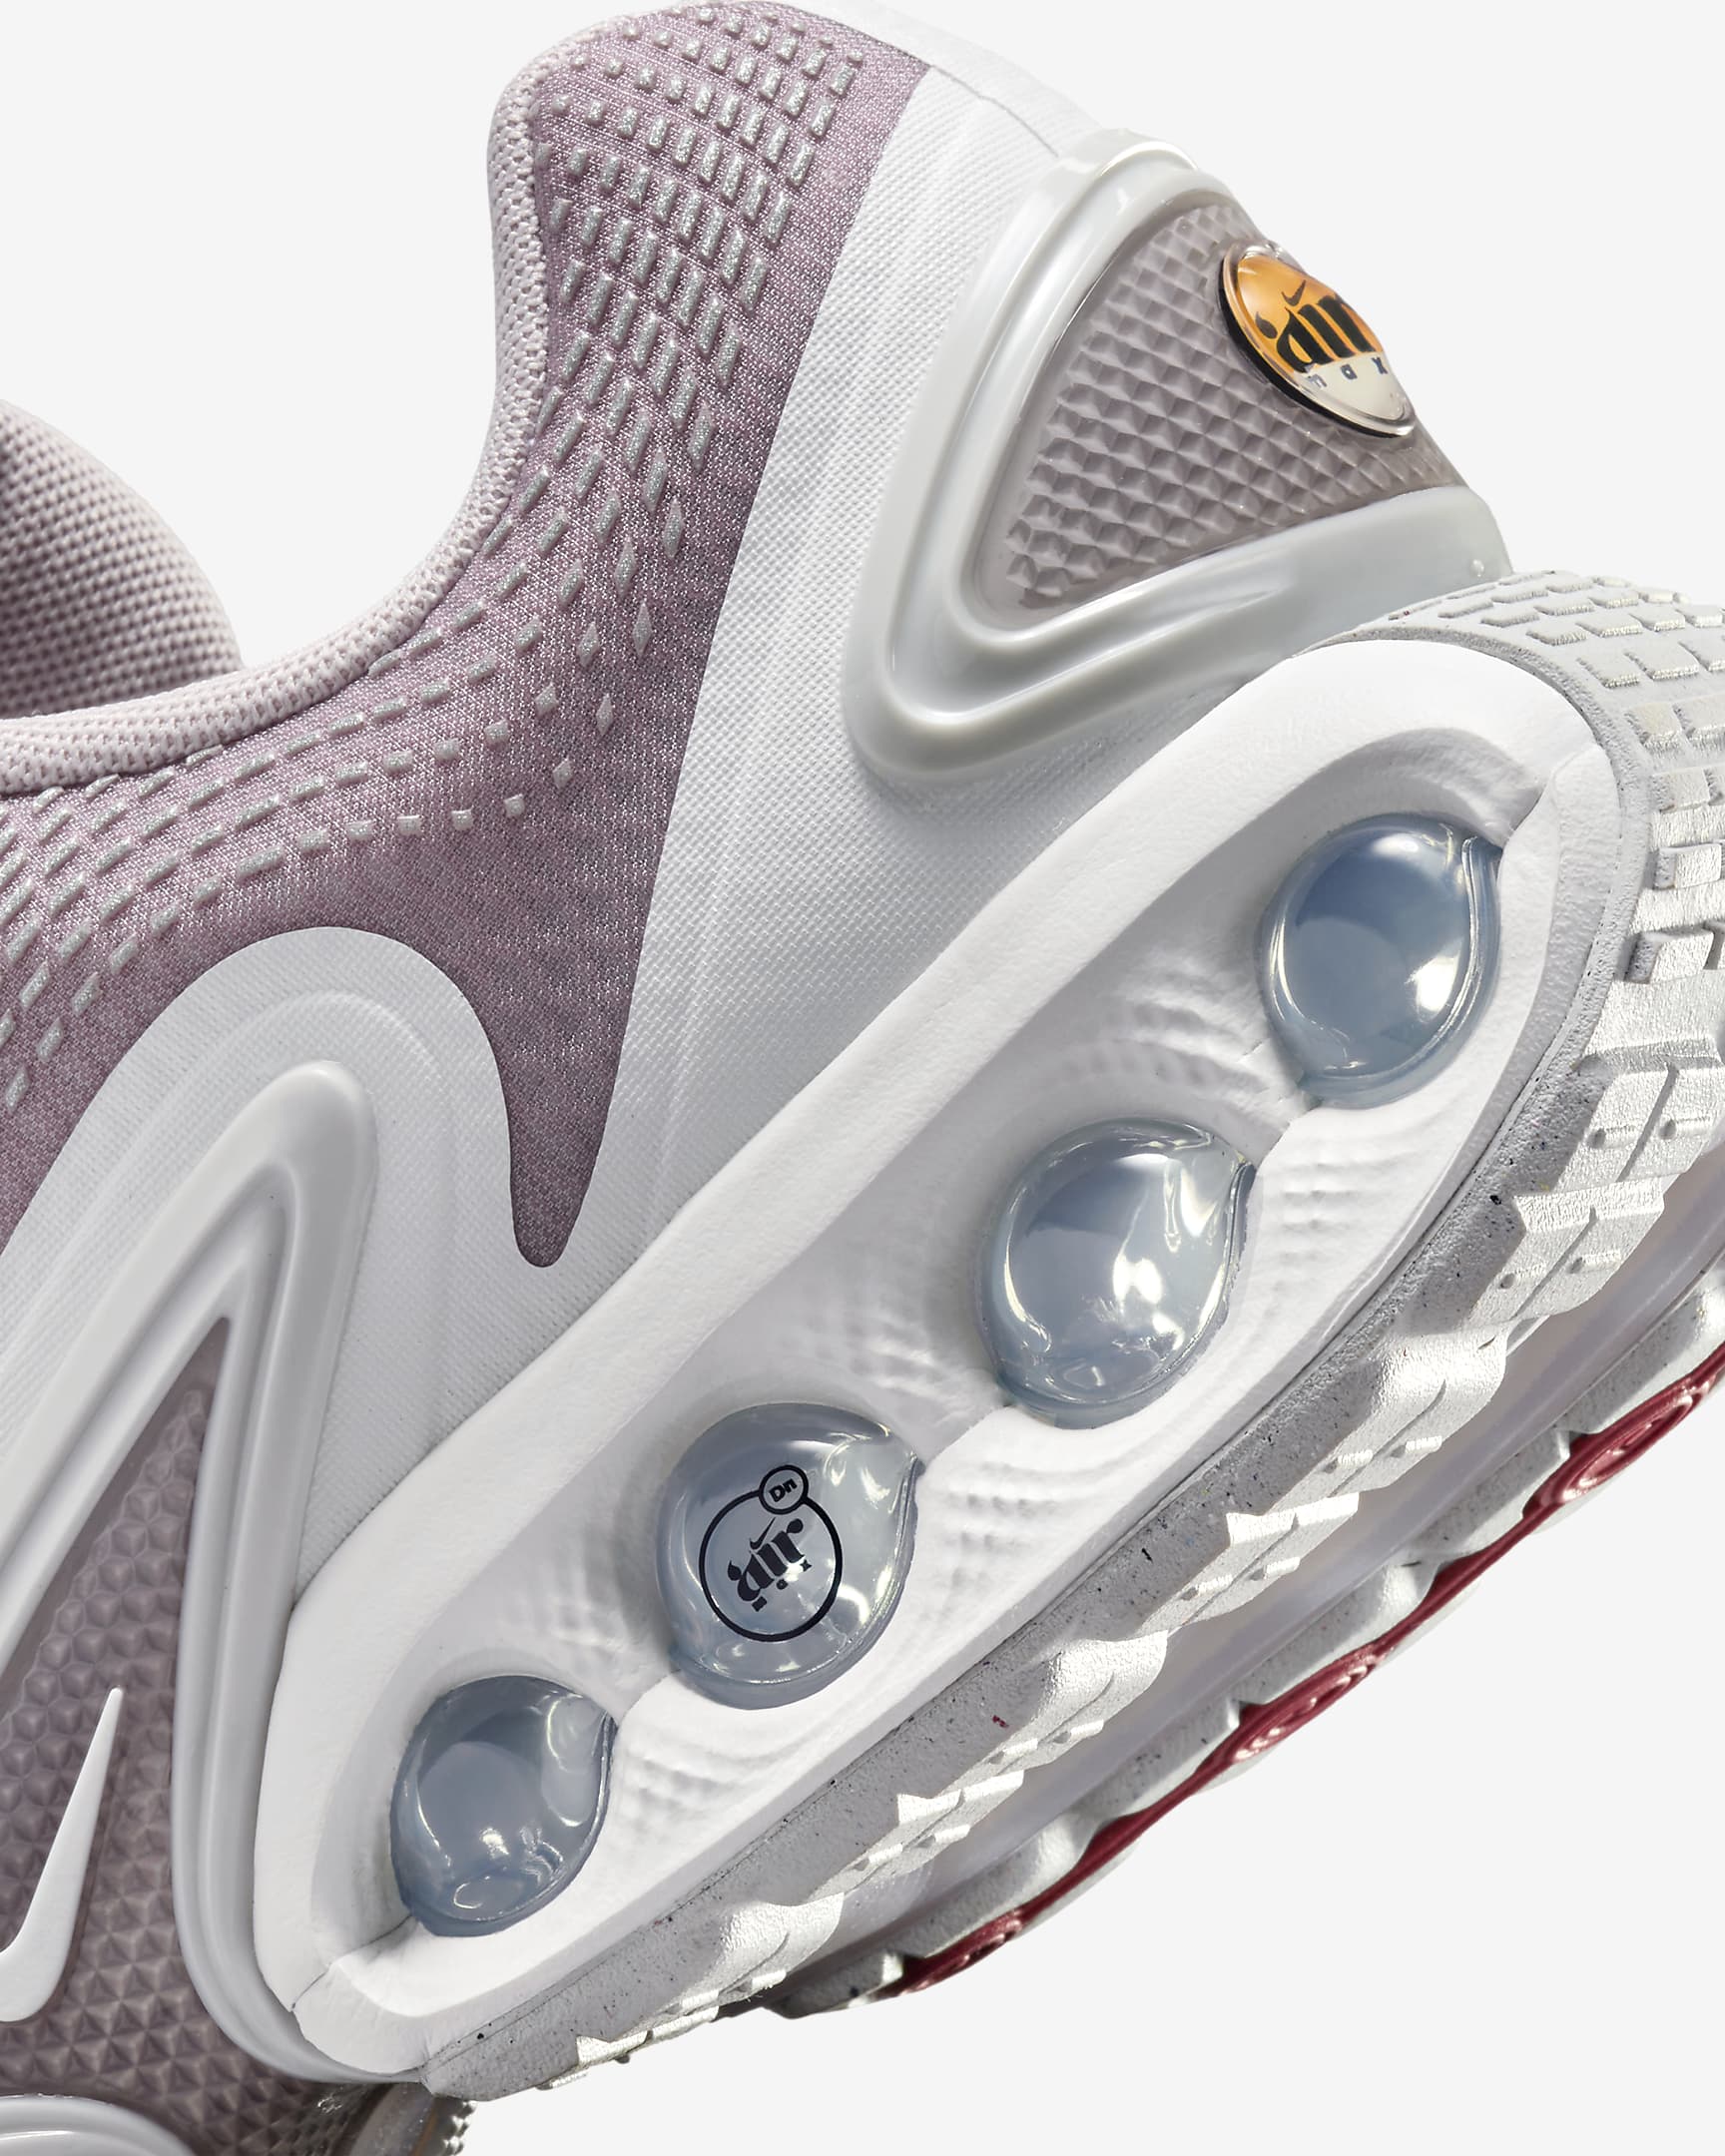 Nike Air Max Dn Shoes - Platinum Violet/Light Violet Ore/Grey Fog/Summit White